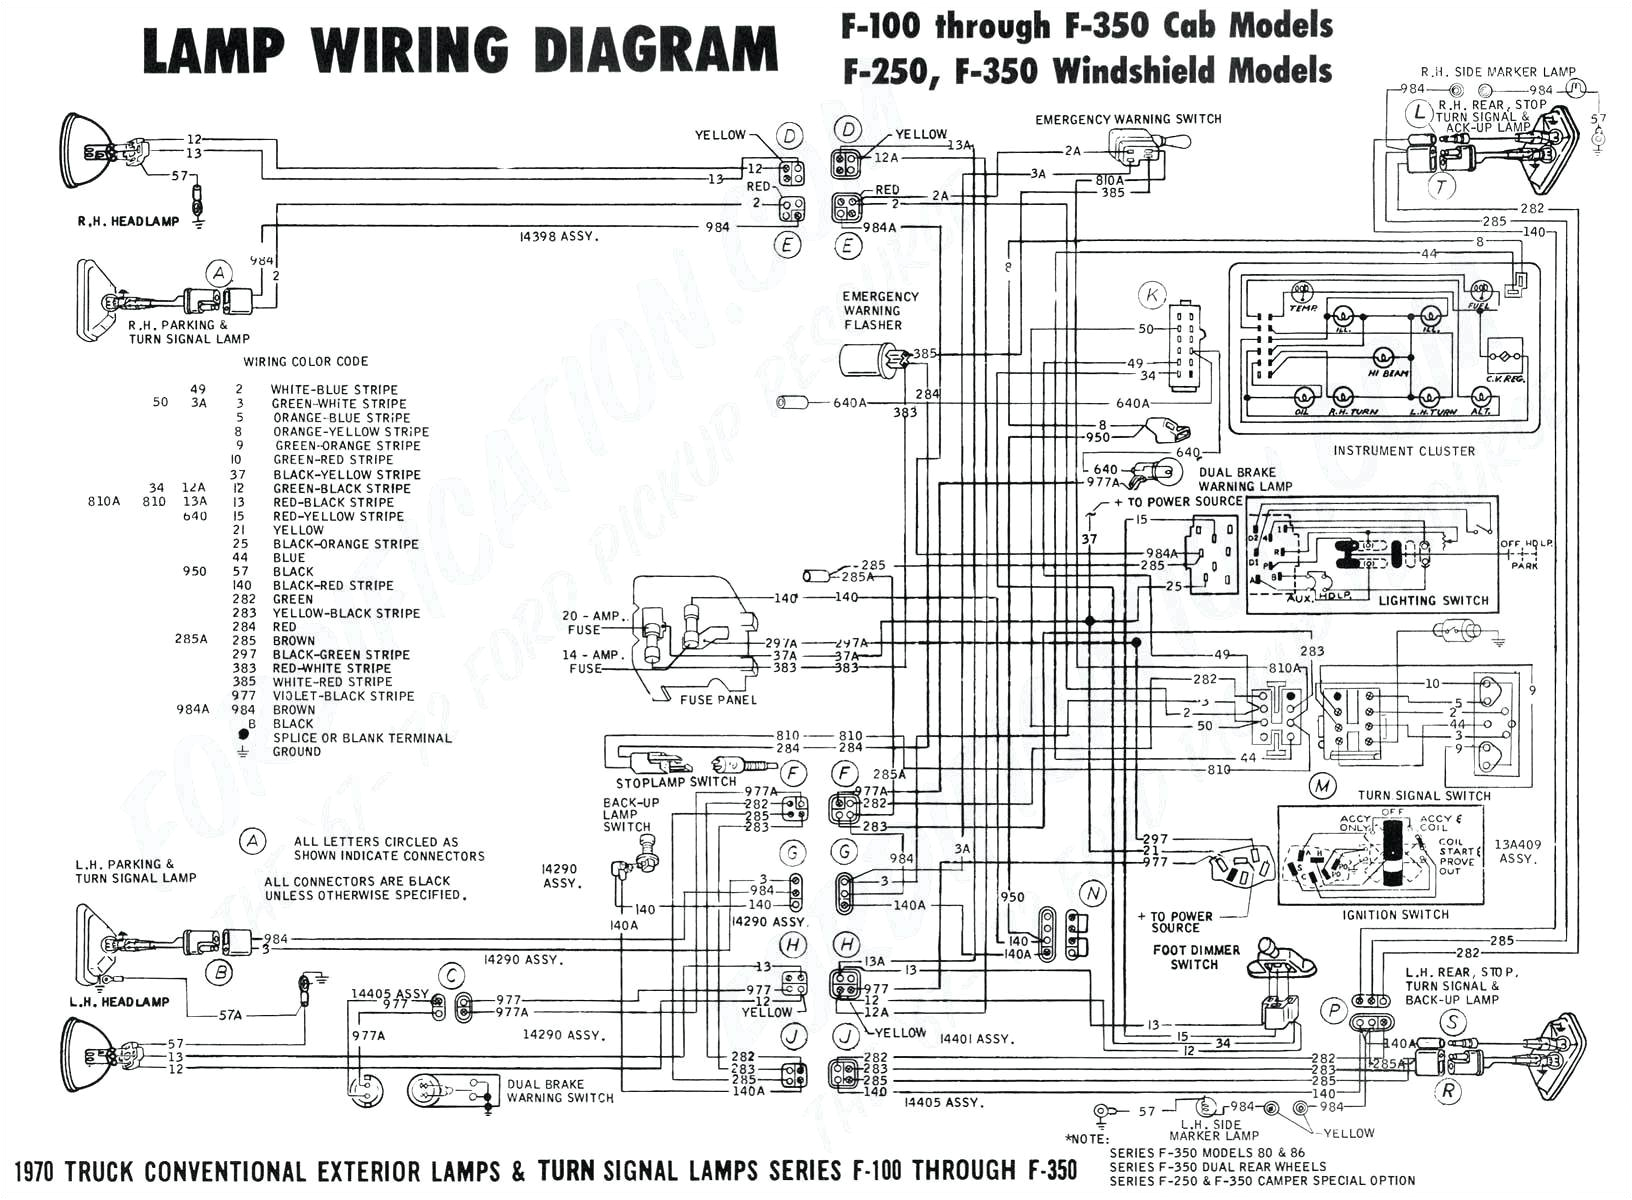 1971 cadillac headlights wiring wiring diagrams favorites 1971 cadillac headlights wiring source 1971 cadillac headlights wiring manual